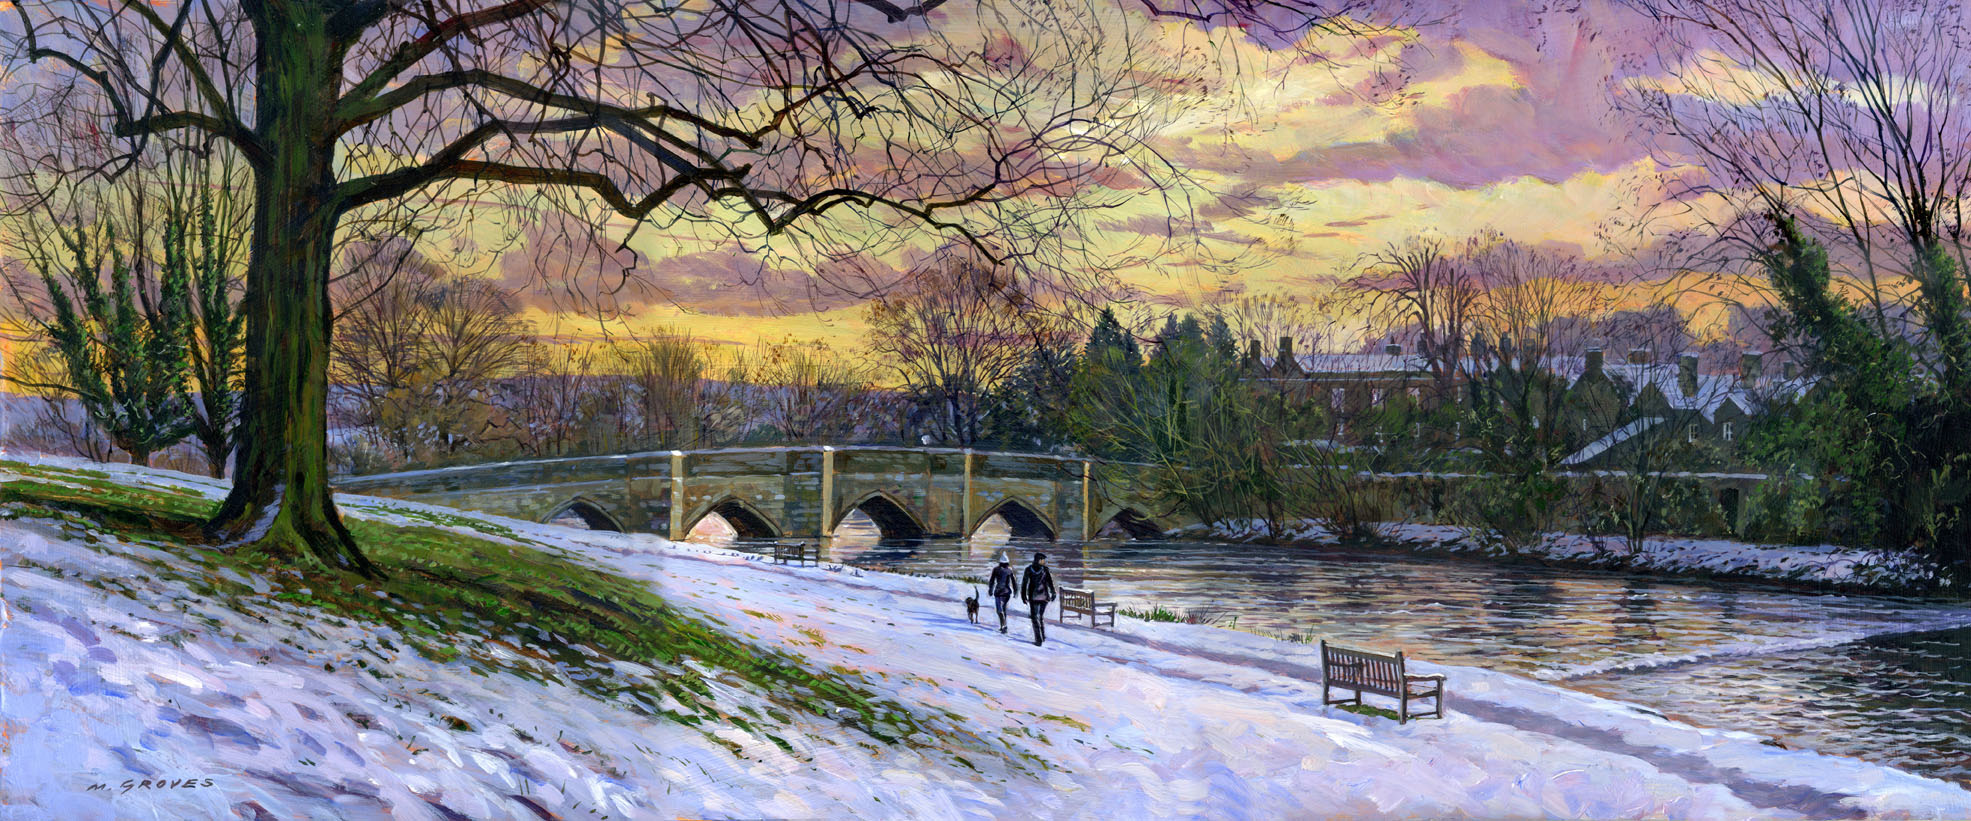 Bakewell Bridge, Winter Sunset by Michael Groves